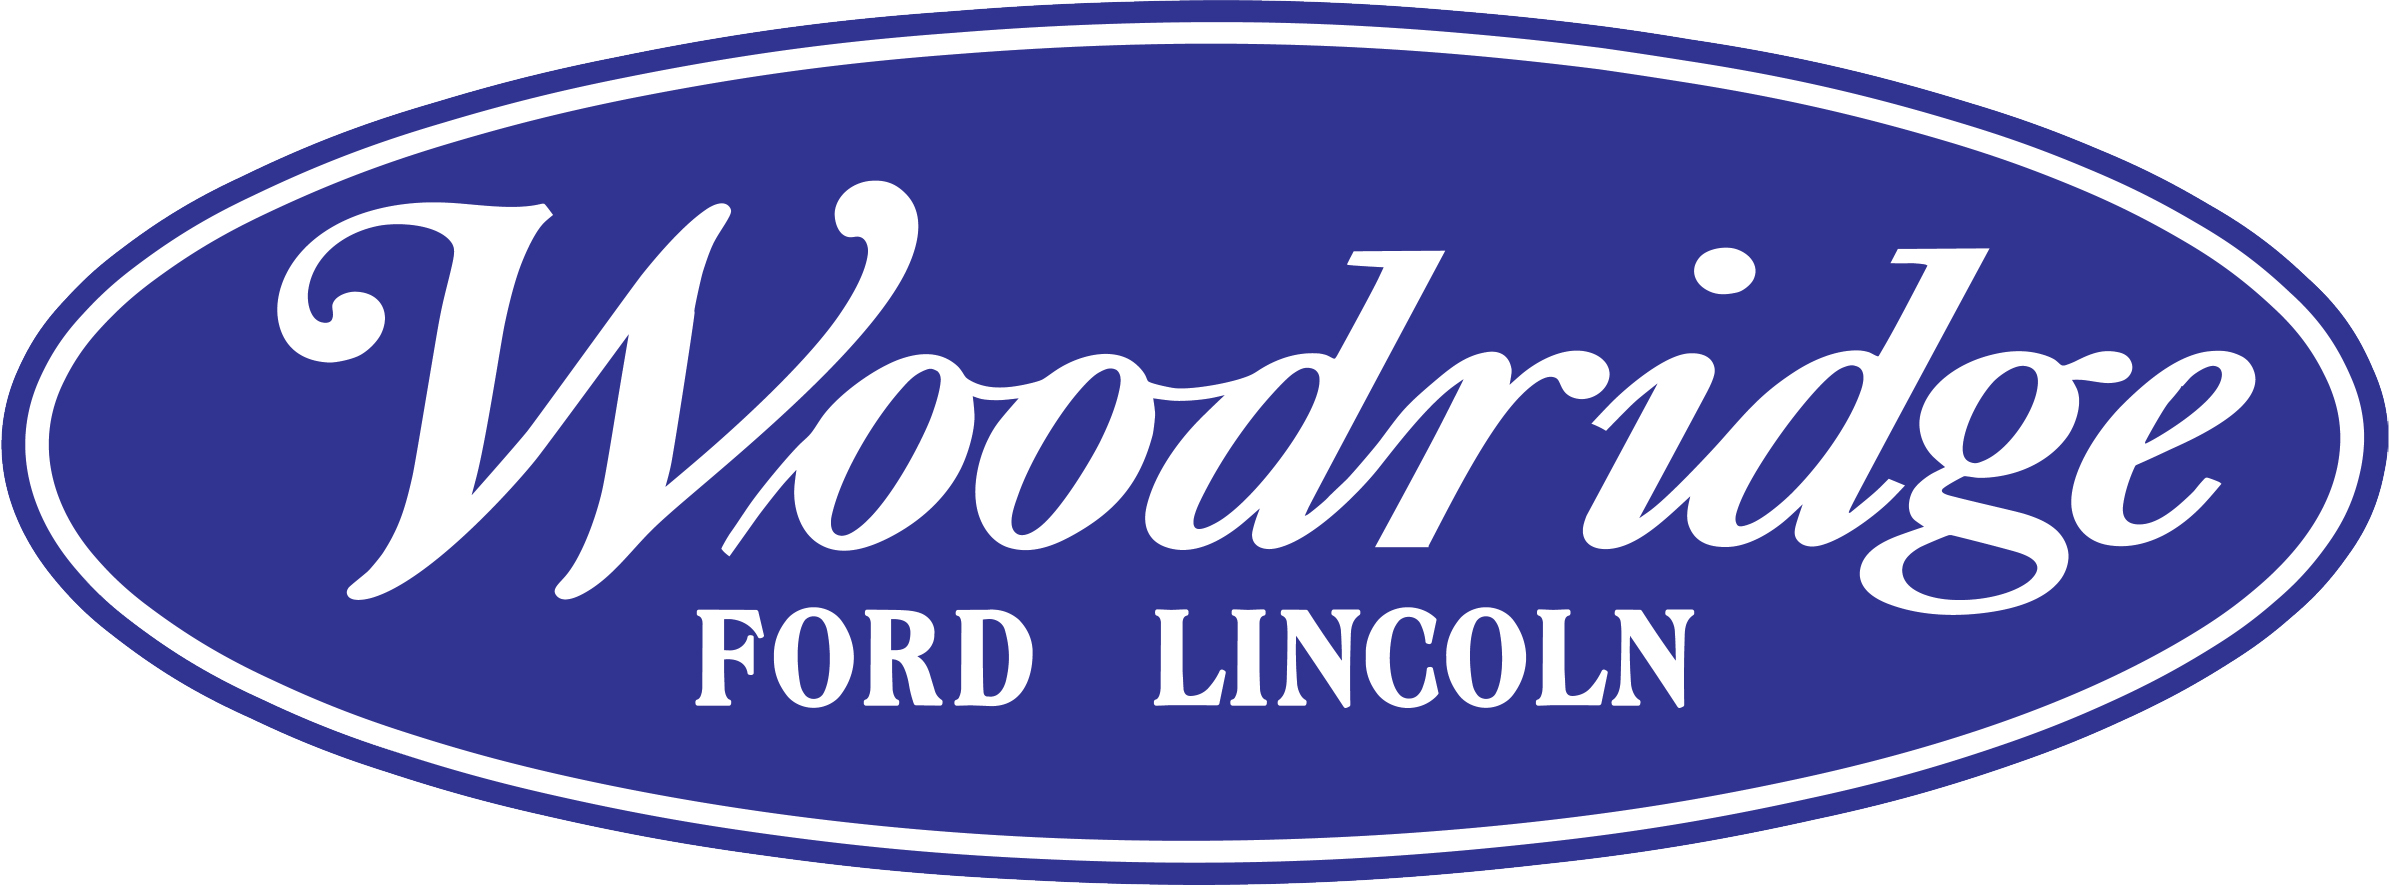 Woodridge Ford